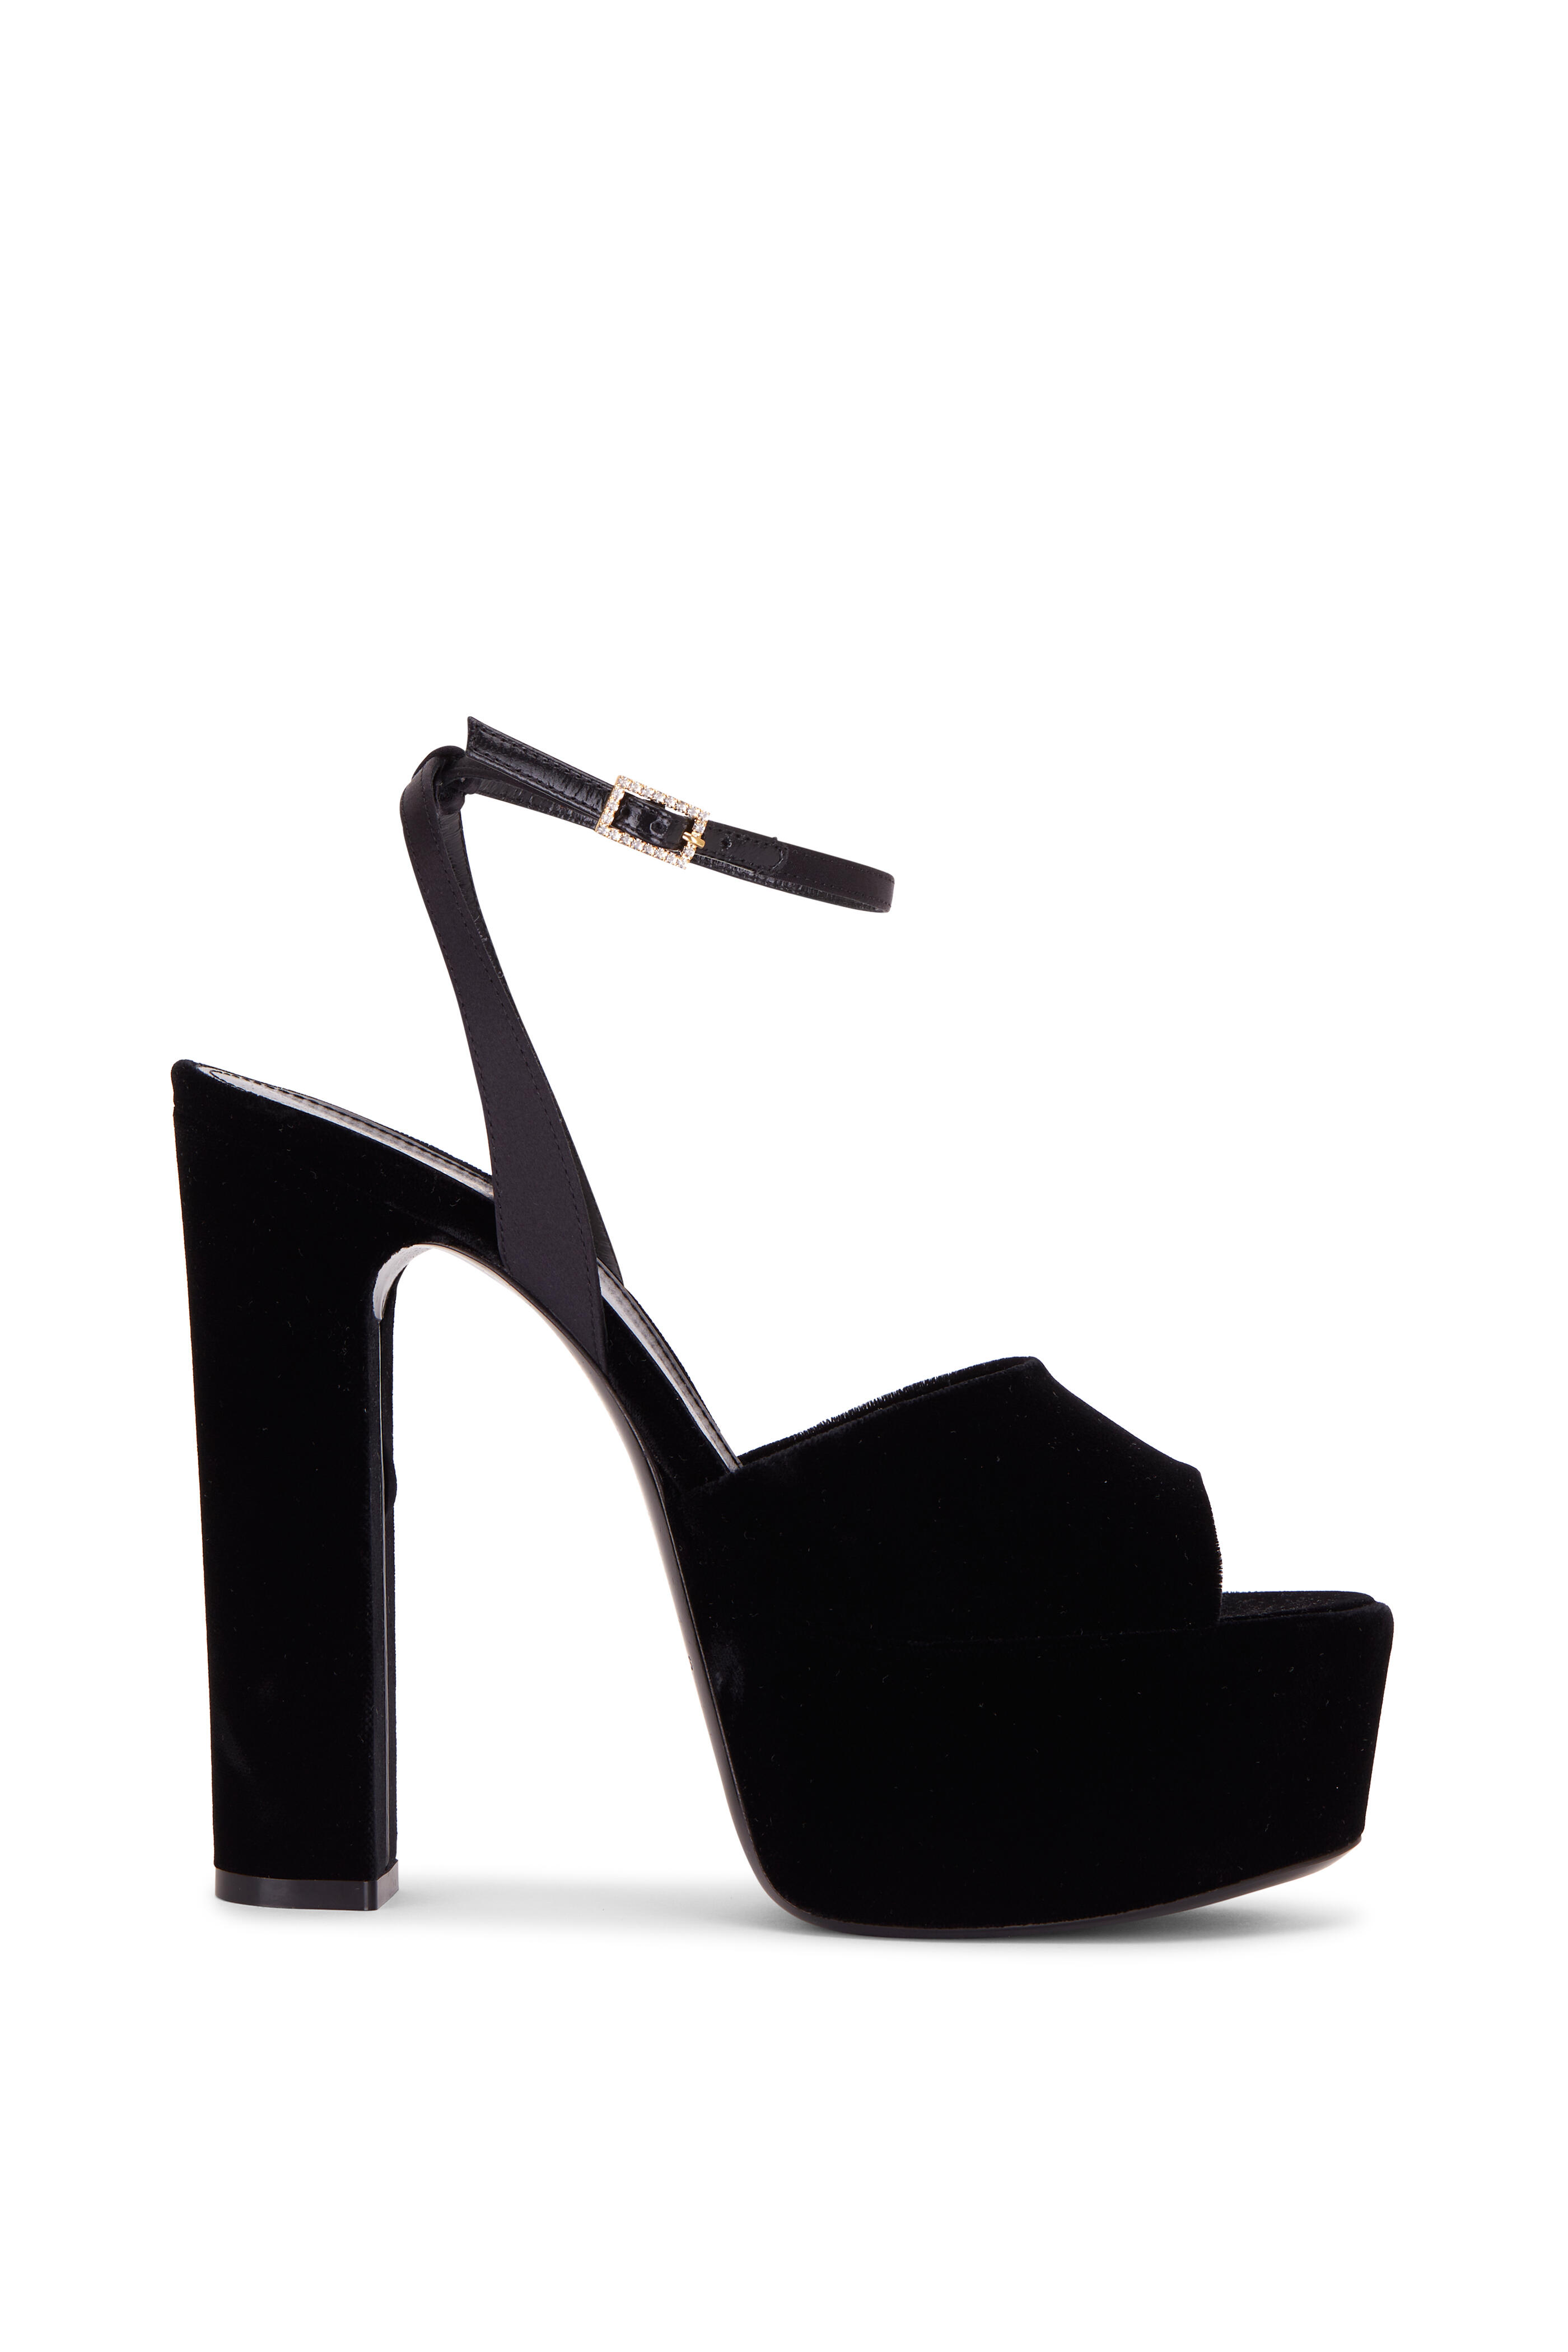 Saint Laurent - Jodie Black Velvet Platform Sandal, 95mm